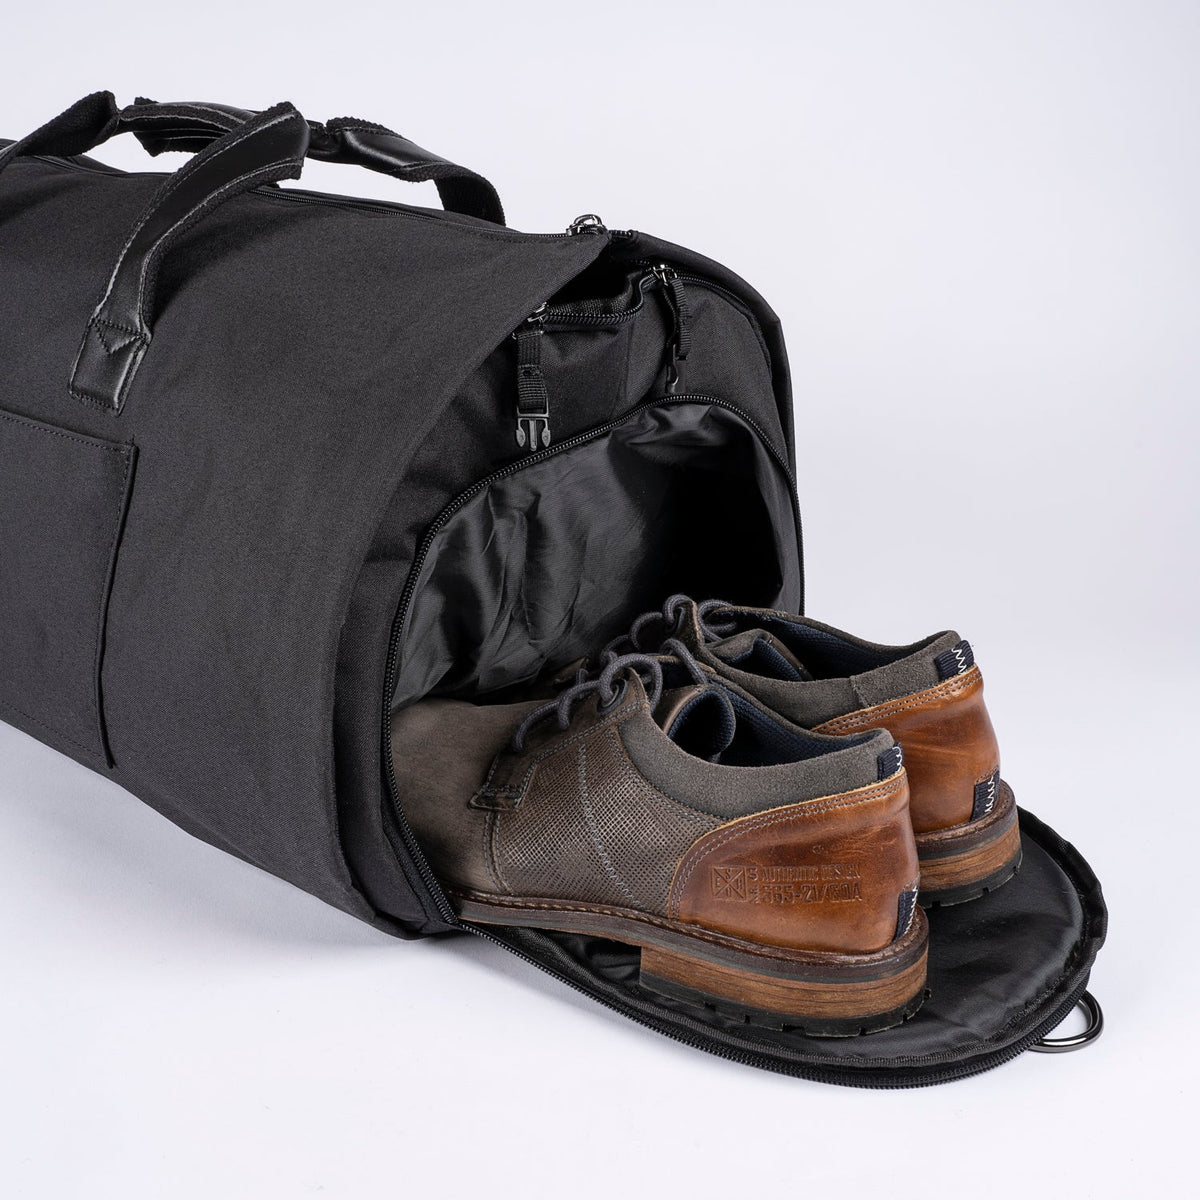 Personalized Mens Garment Duffle Bag, Canvas Men's Garment Bag, Carry on Bag,  Suit Travel Bag, Groomsmen Gift, Gift for Best Man 